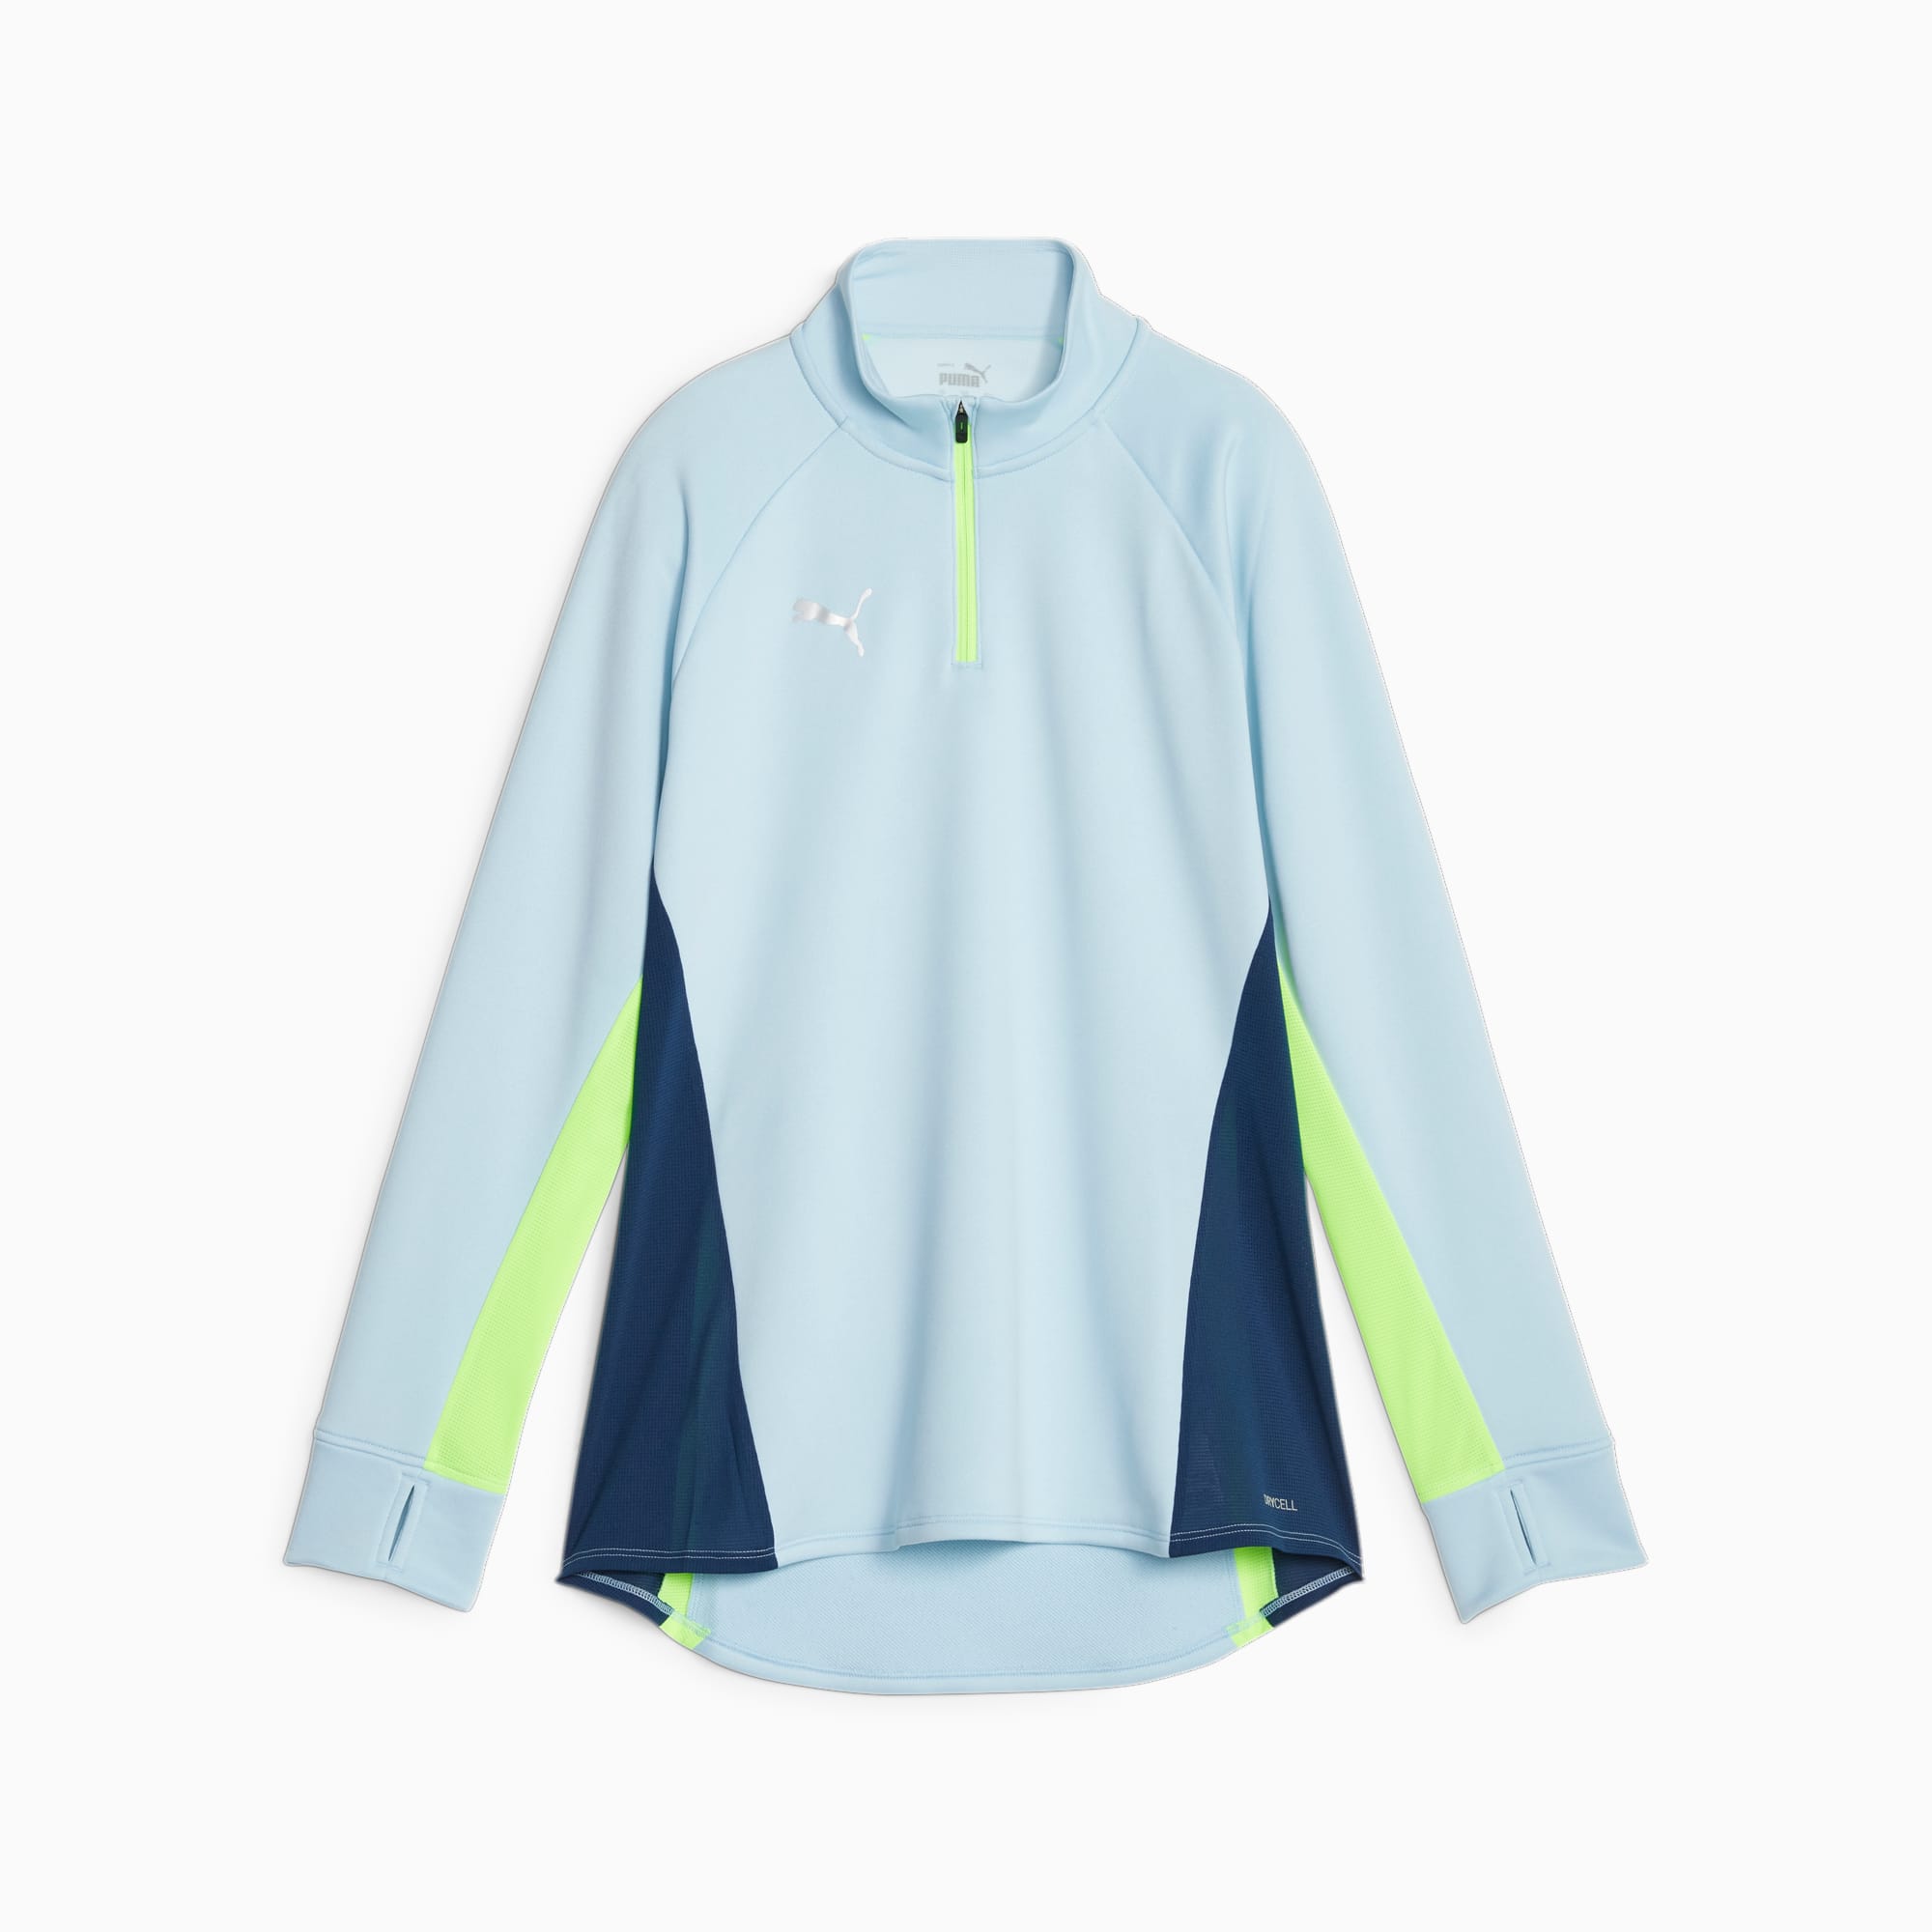 PUMA Individualblaze Women's Quarter-Zip Football Top Shirt, Silver Sky/Persian Blue, Size XS, Clothing